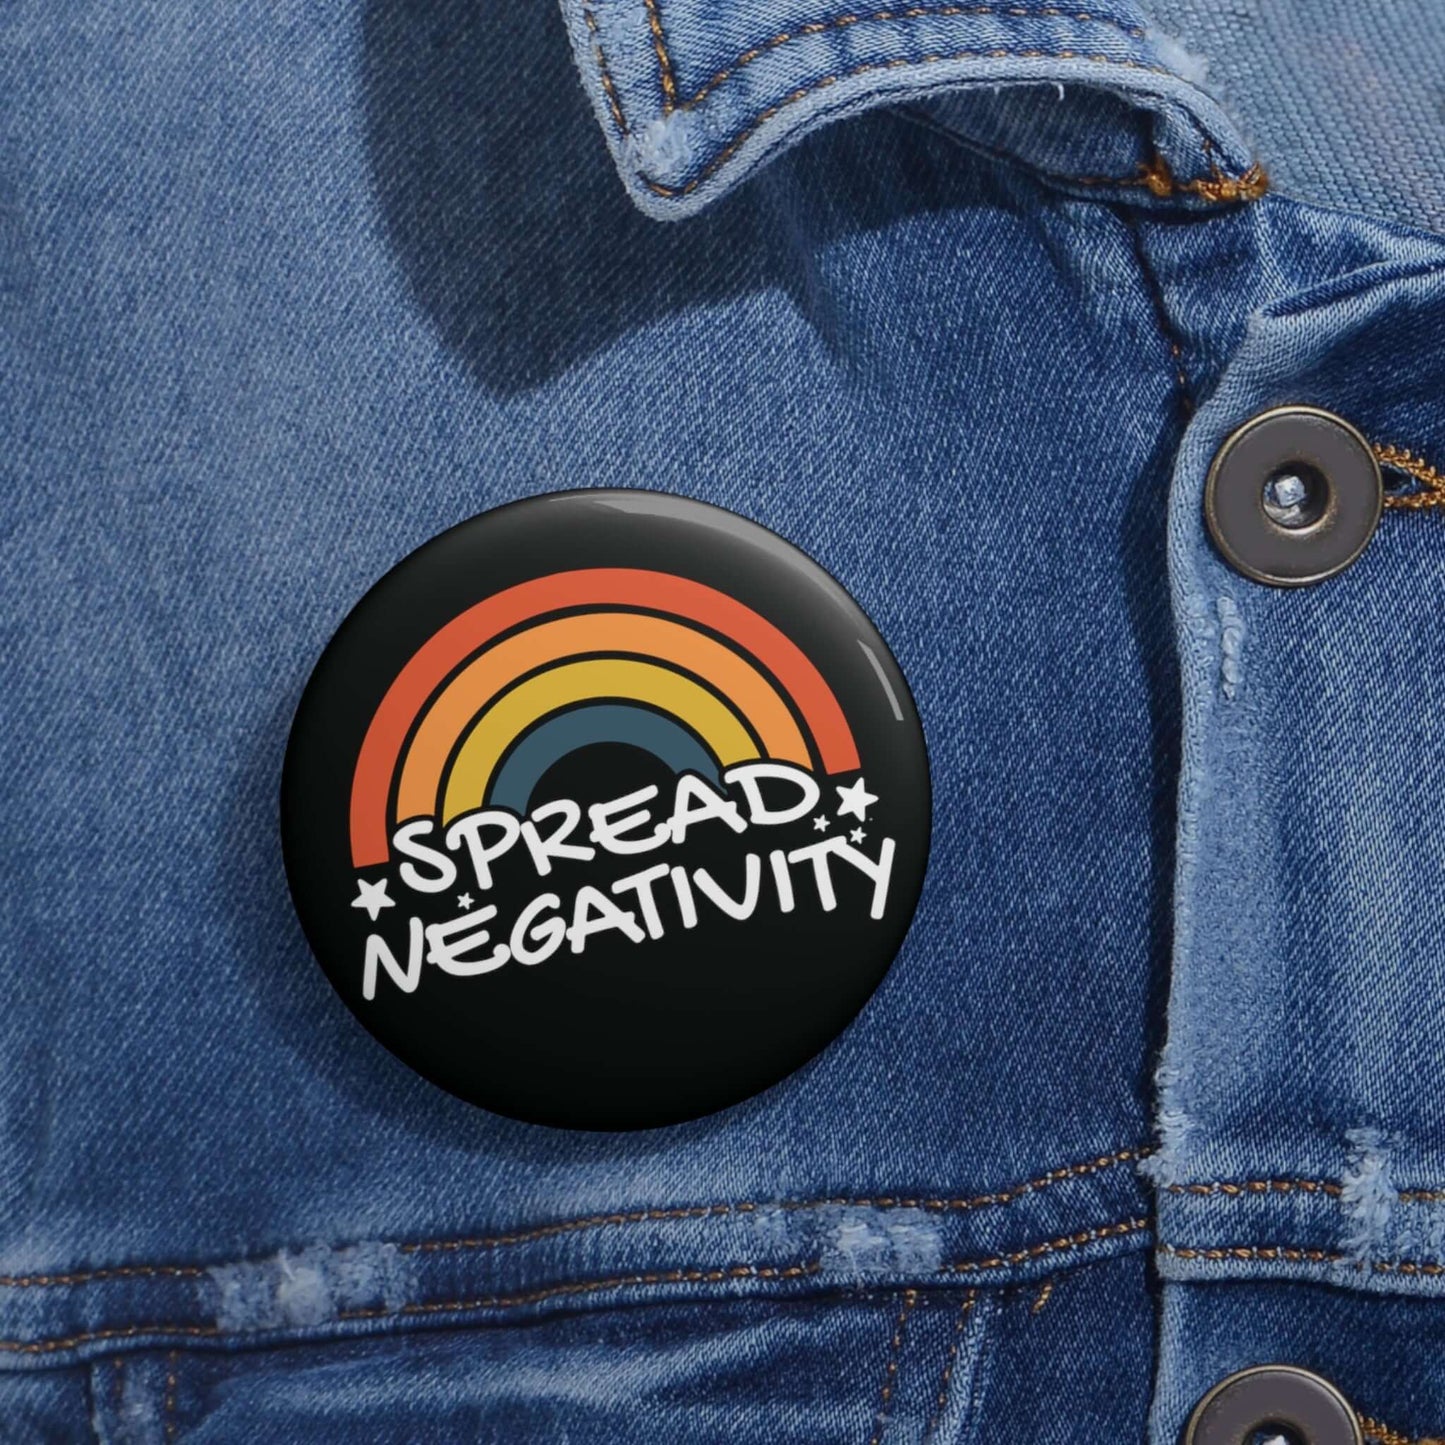 Demotivational Spread negativity pinback button